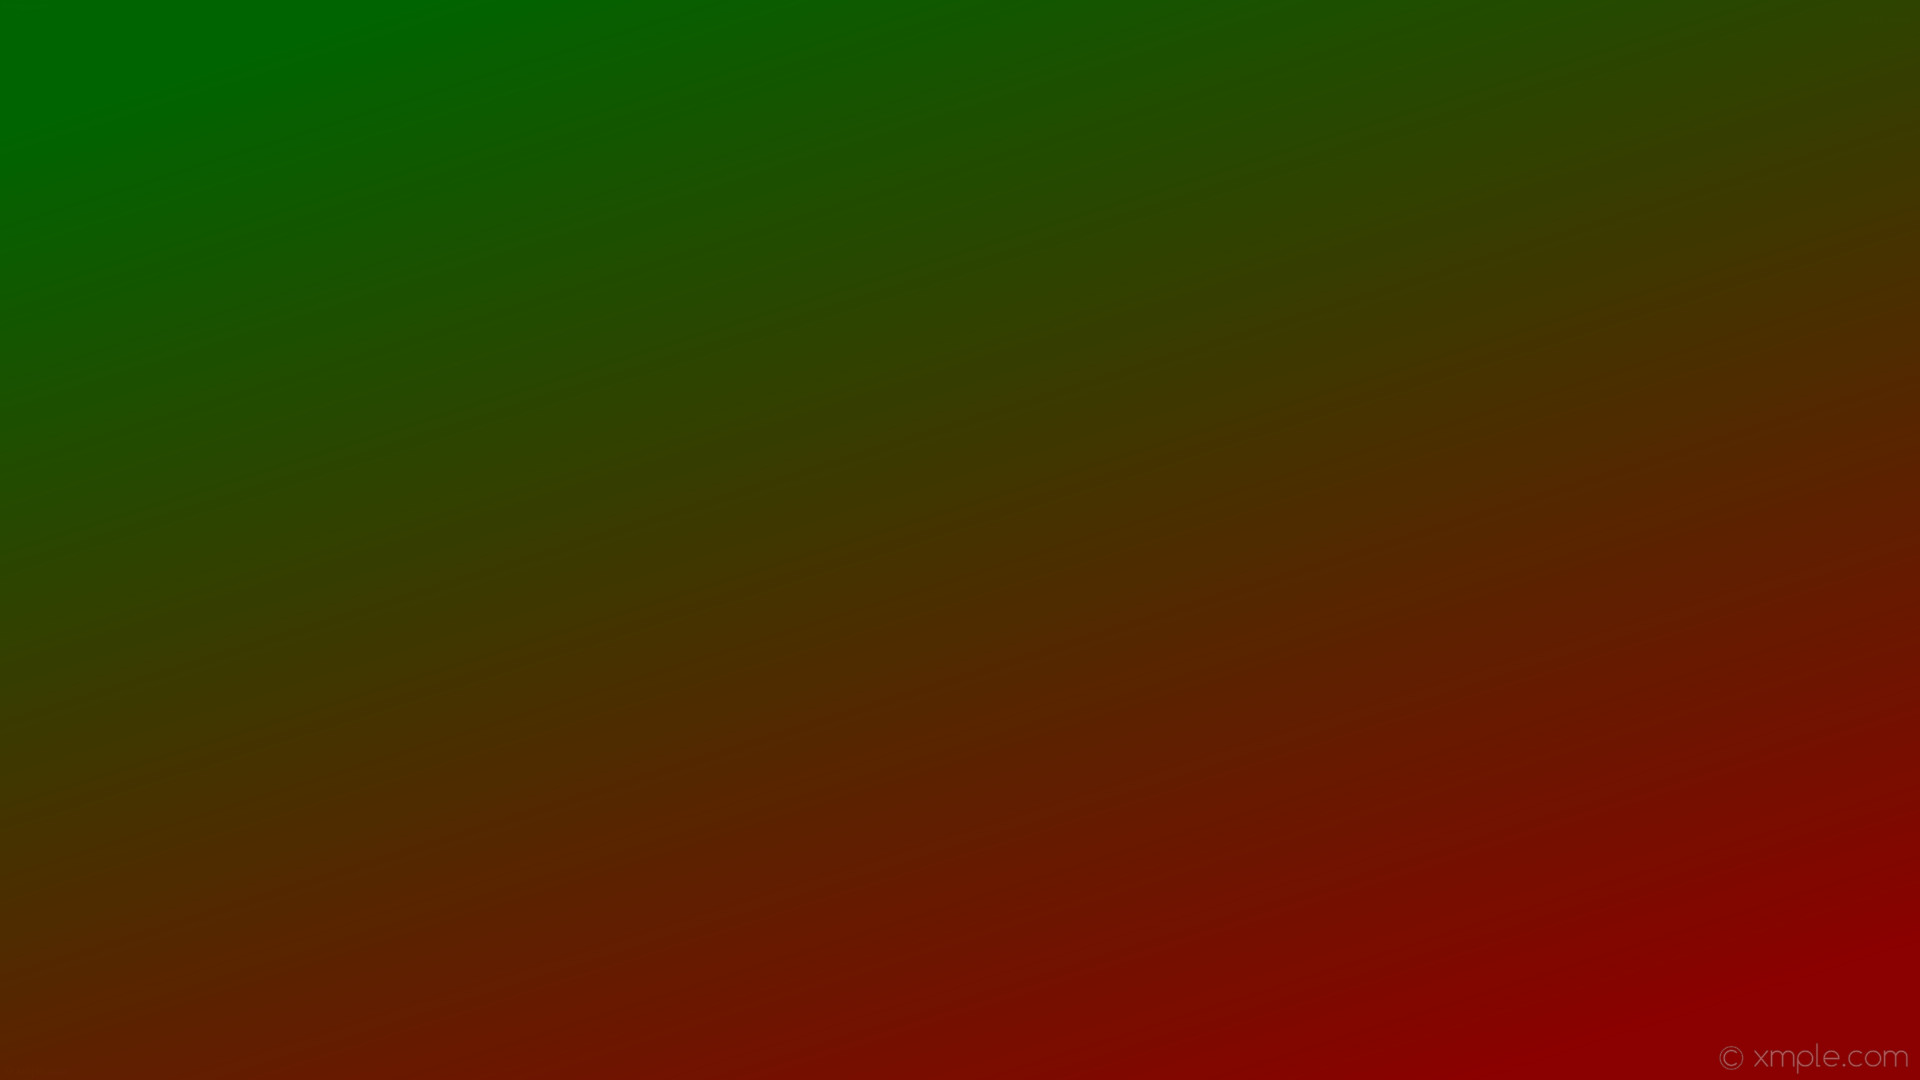 1920x1080 wallpaper gradient linear green red dark green dark red #006400 #8b0000 135Â°